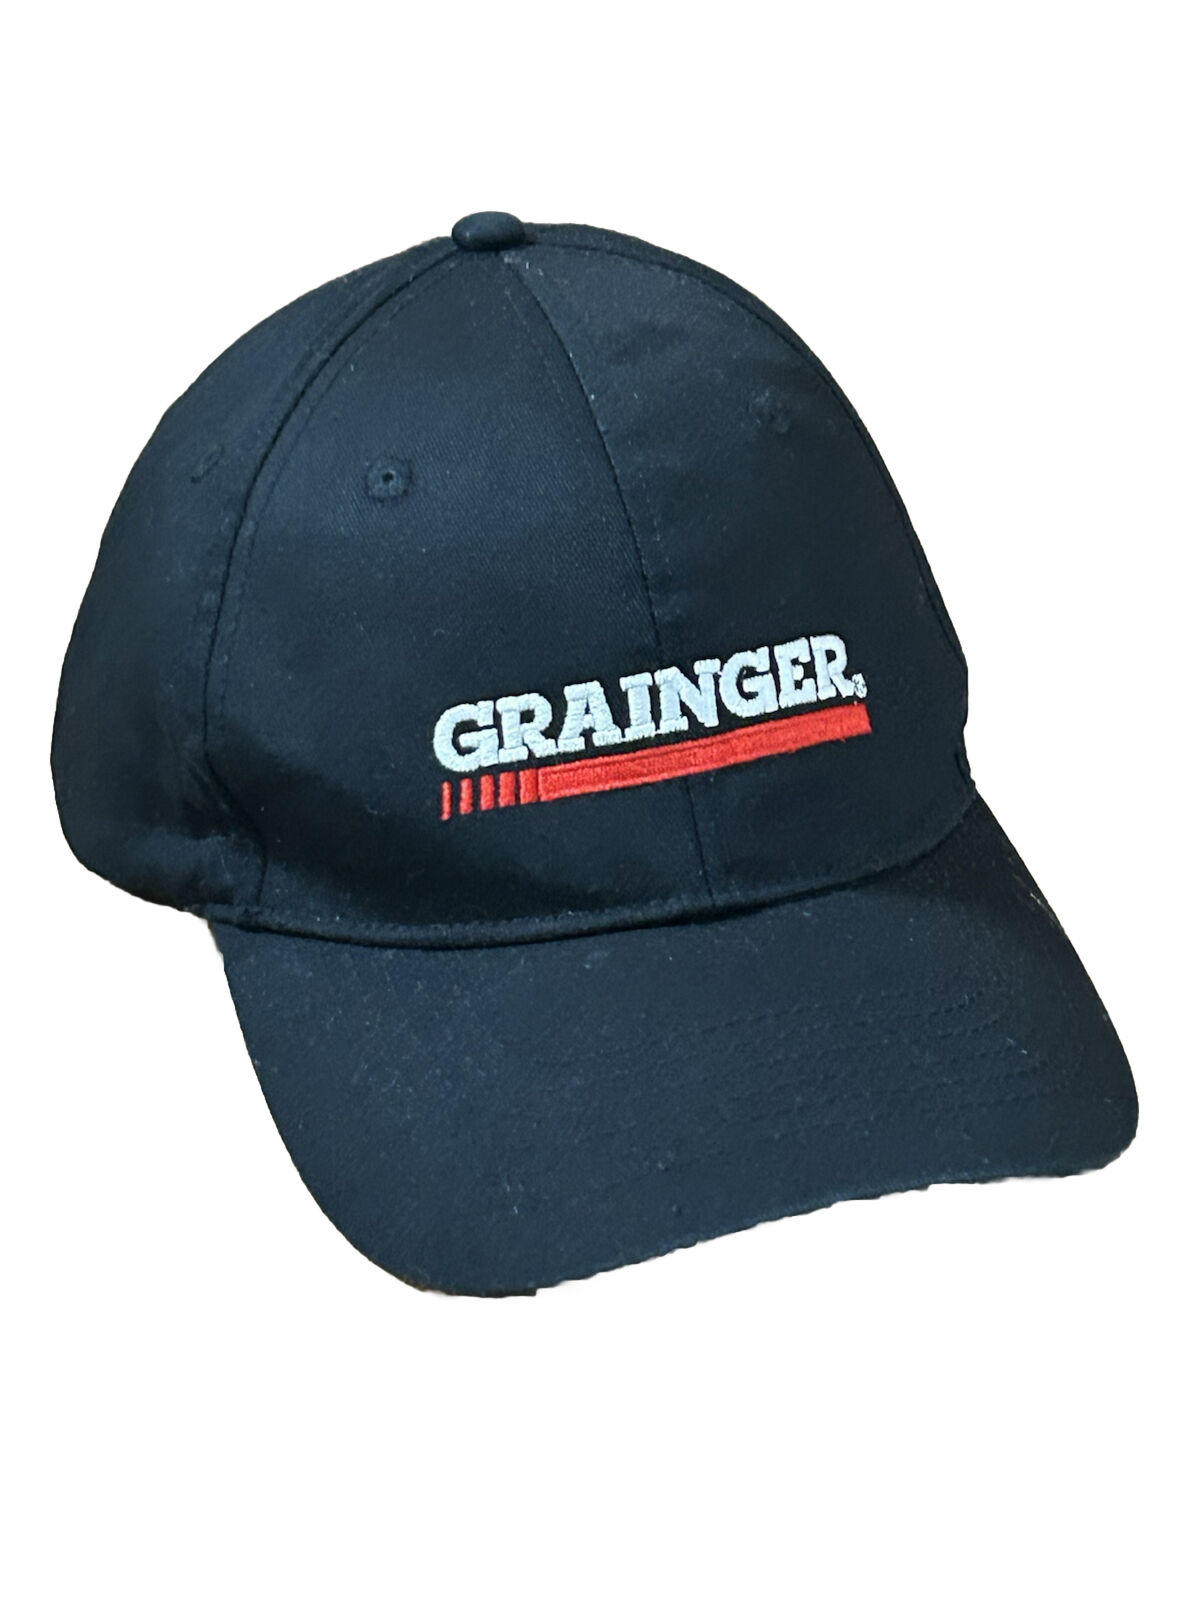 Grainger Industrial Supplies Spellout Logo Baseball Hat Cap in Black Adjustable